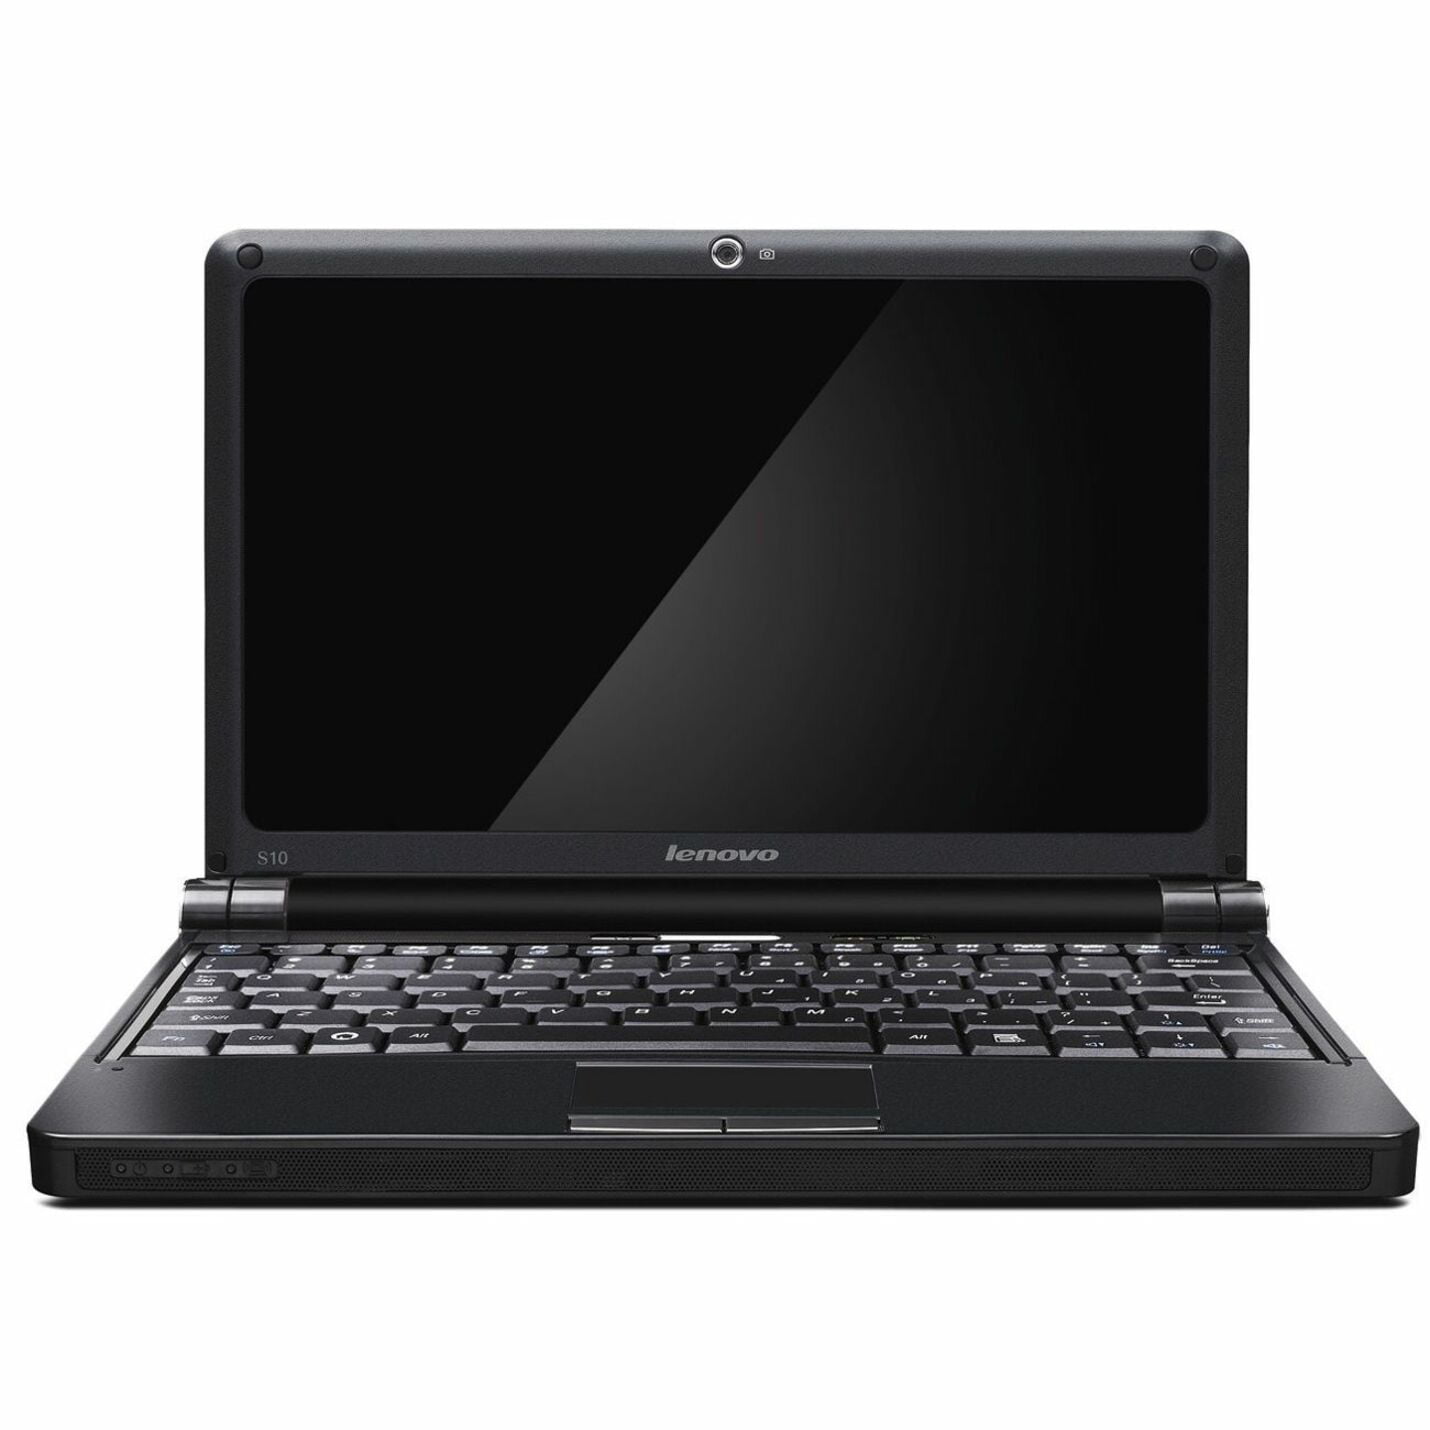 Medic Wat dan ook schildpad Lenovo IdeaPad 10.1" Netbook, Intel Atom N270, 160GB HD, Windows XP Home -  Walmart.com